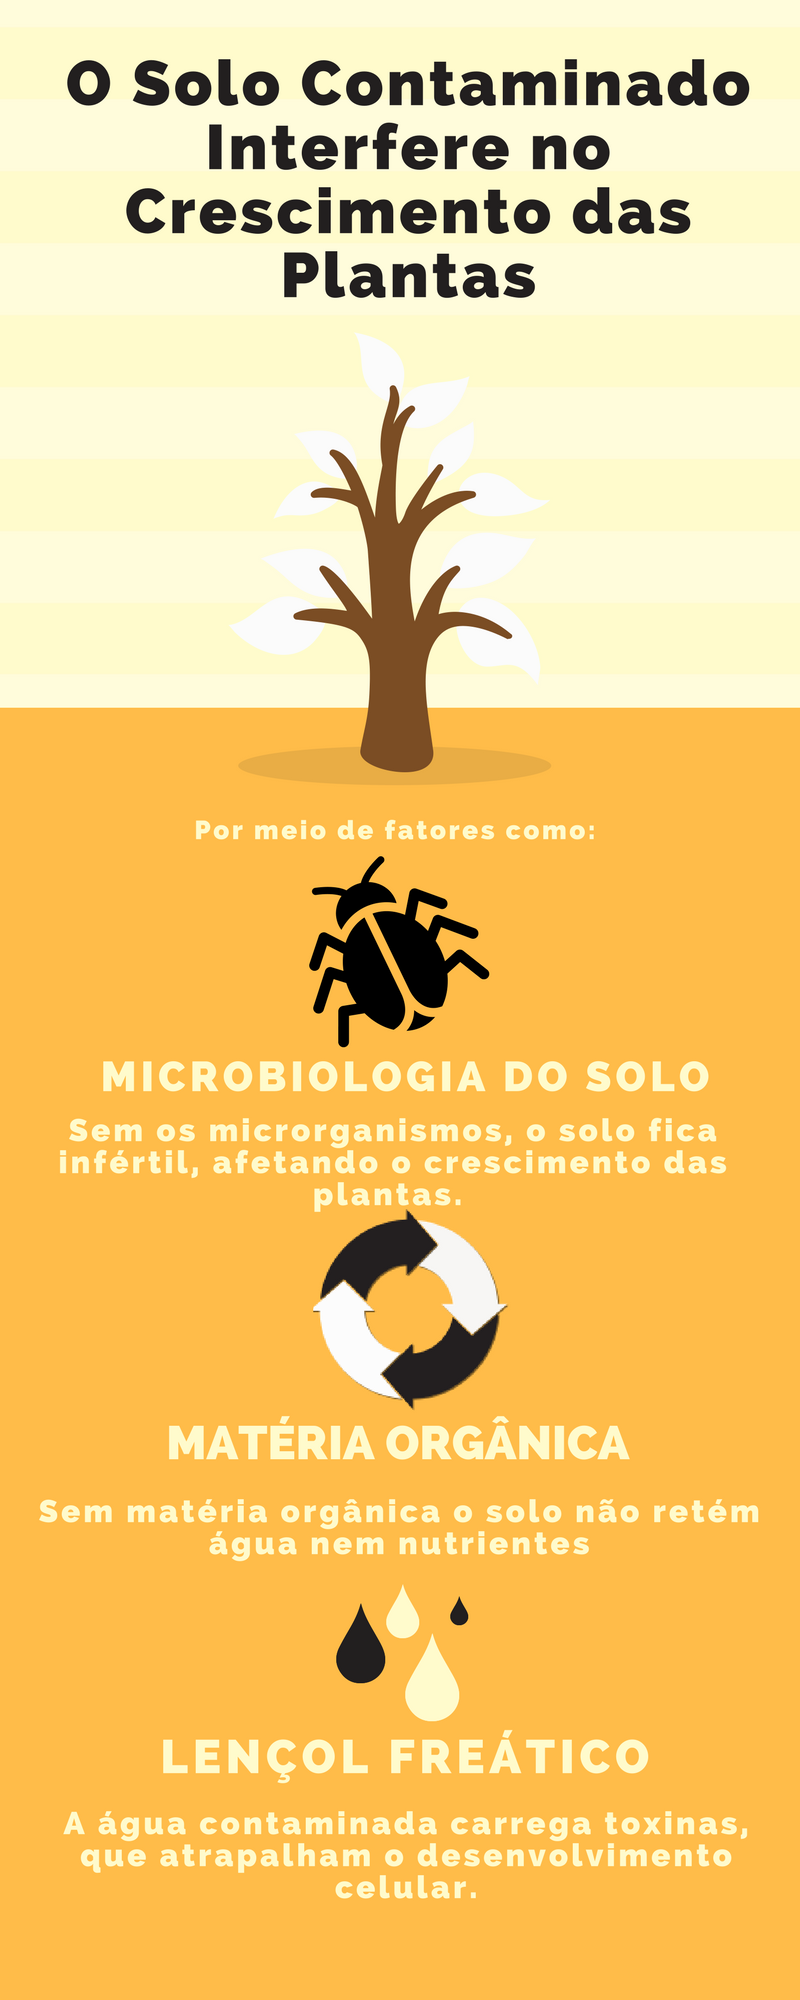 Os Impactos dos Agrotóxicos no Meio Ambiente. | by Ana Clara Abreu | Medium